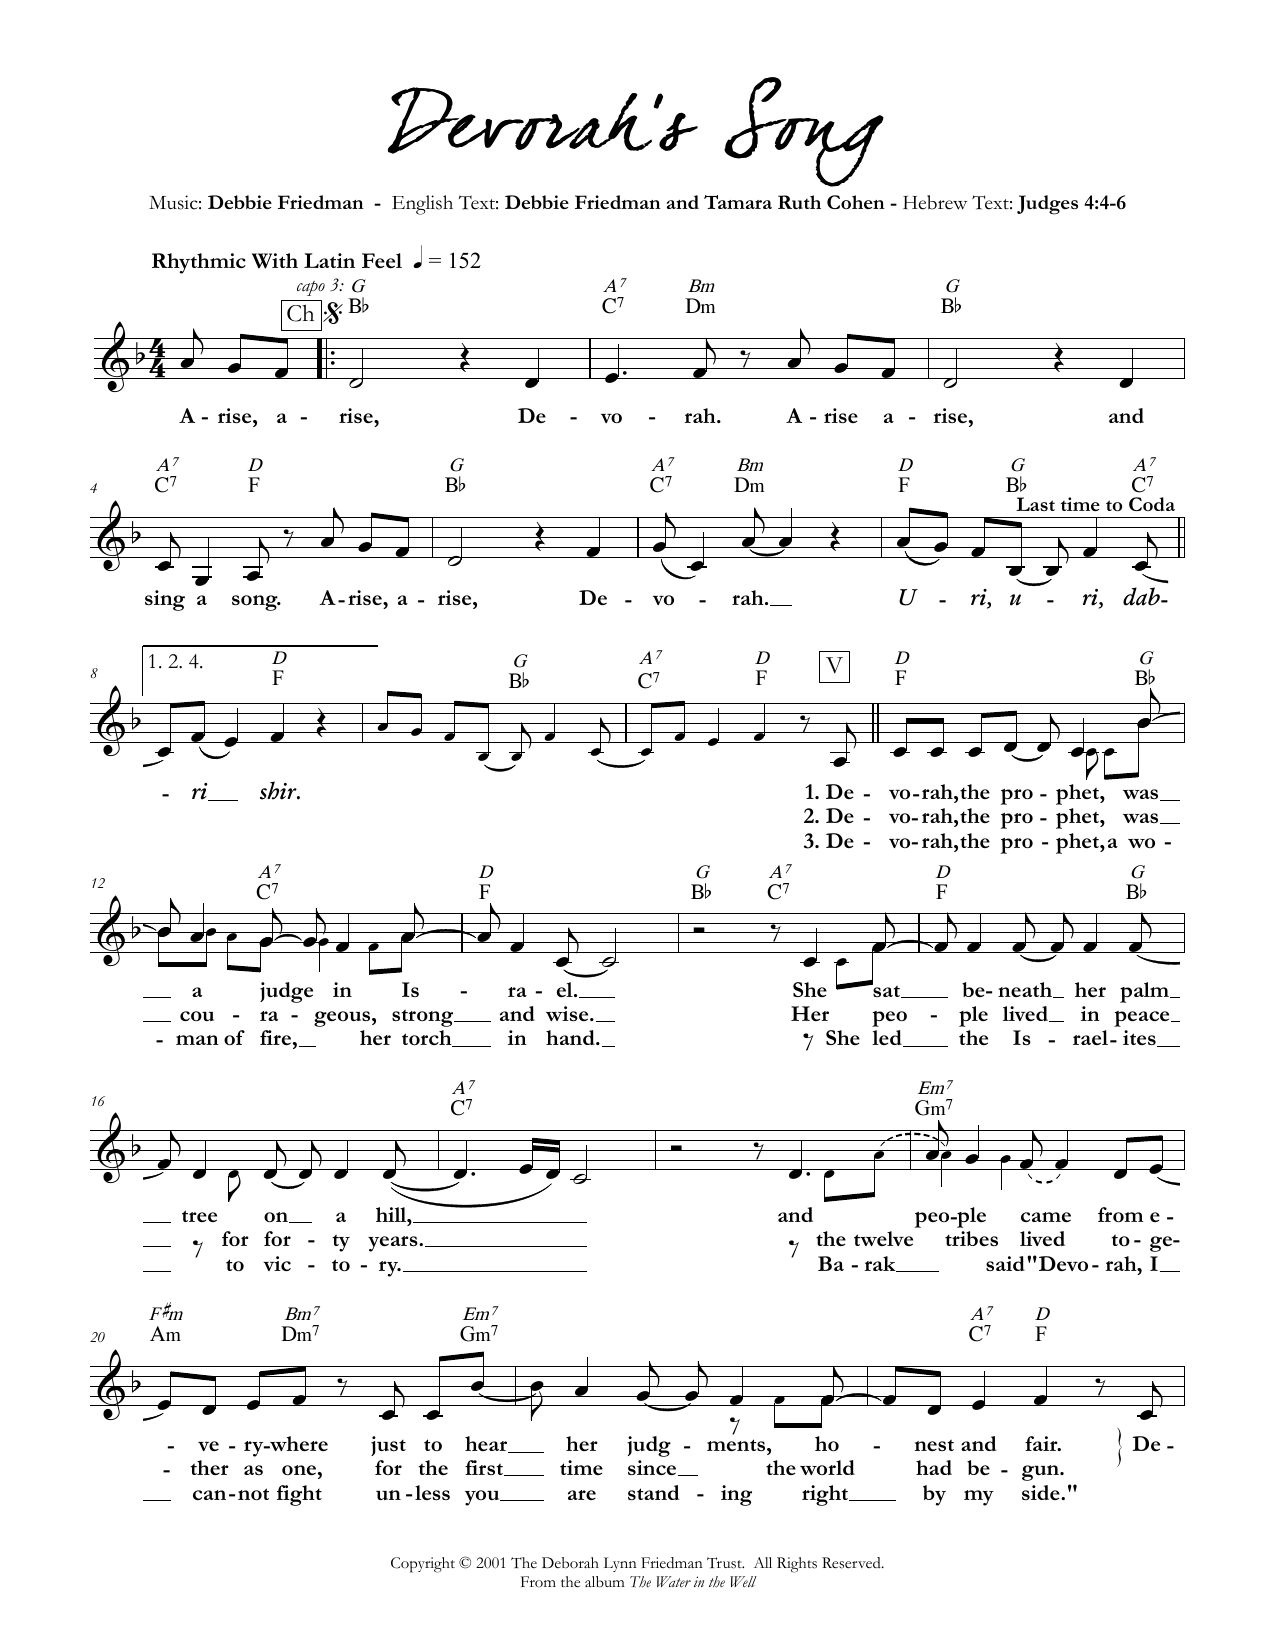 Download Debbie Friedman & Tamara Ruth Cohen Devorah's Song Sheet Music and learn how to play Lead Sheet / Fake Book PDF digital score in minutes